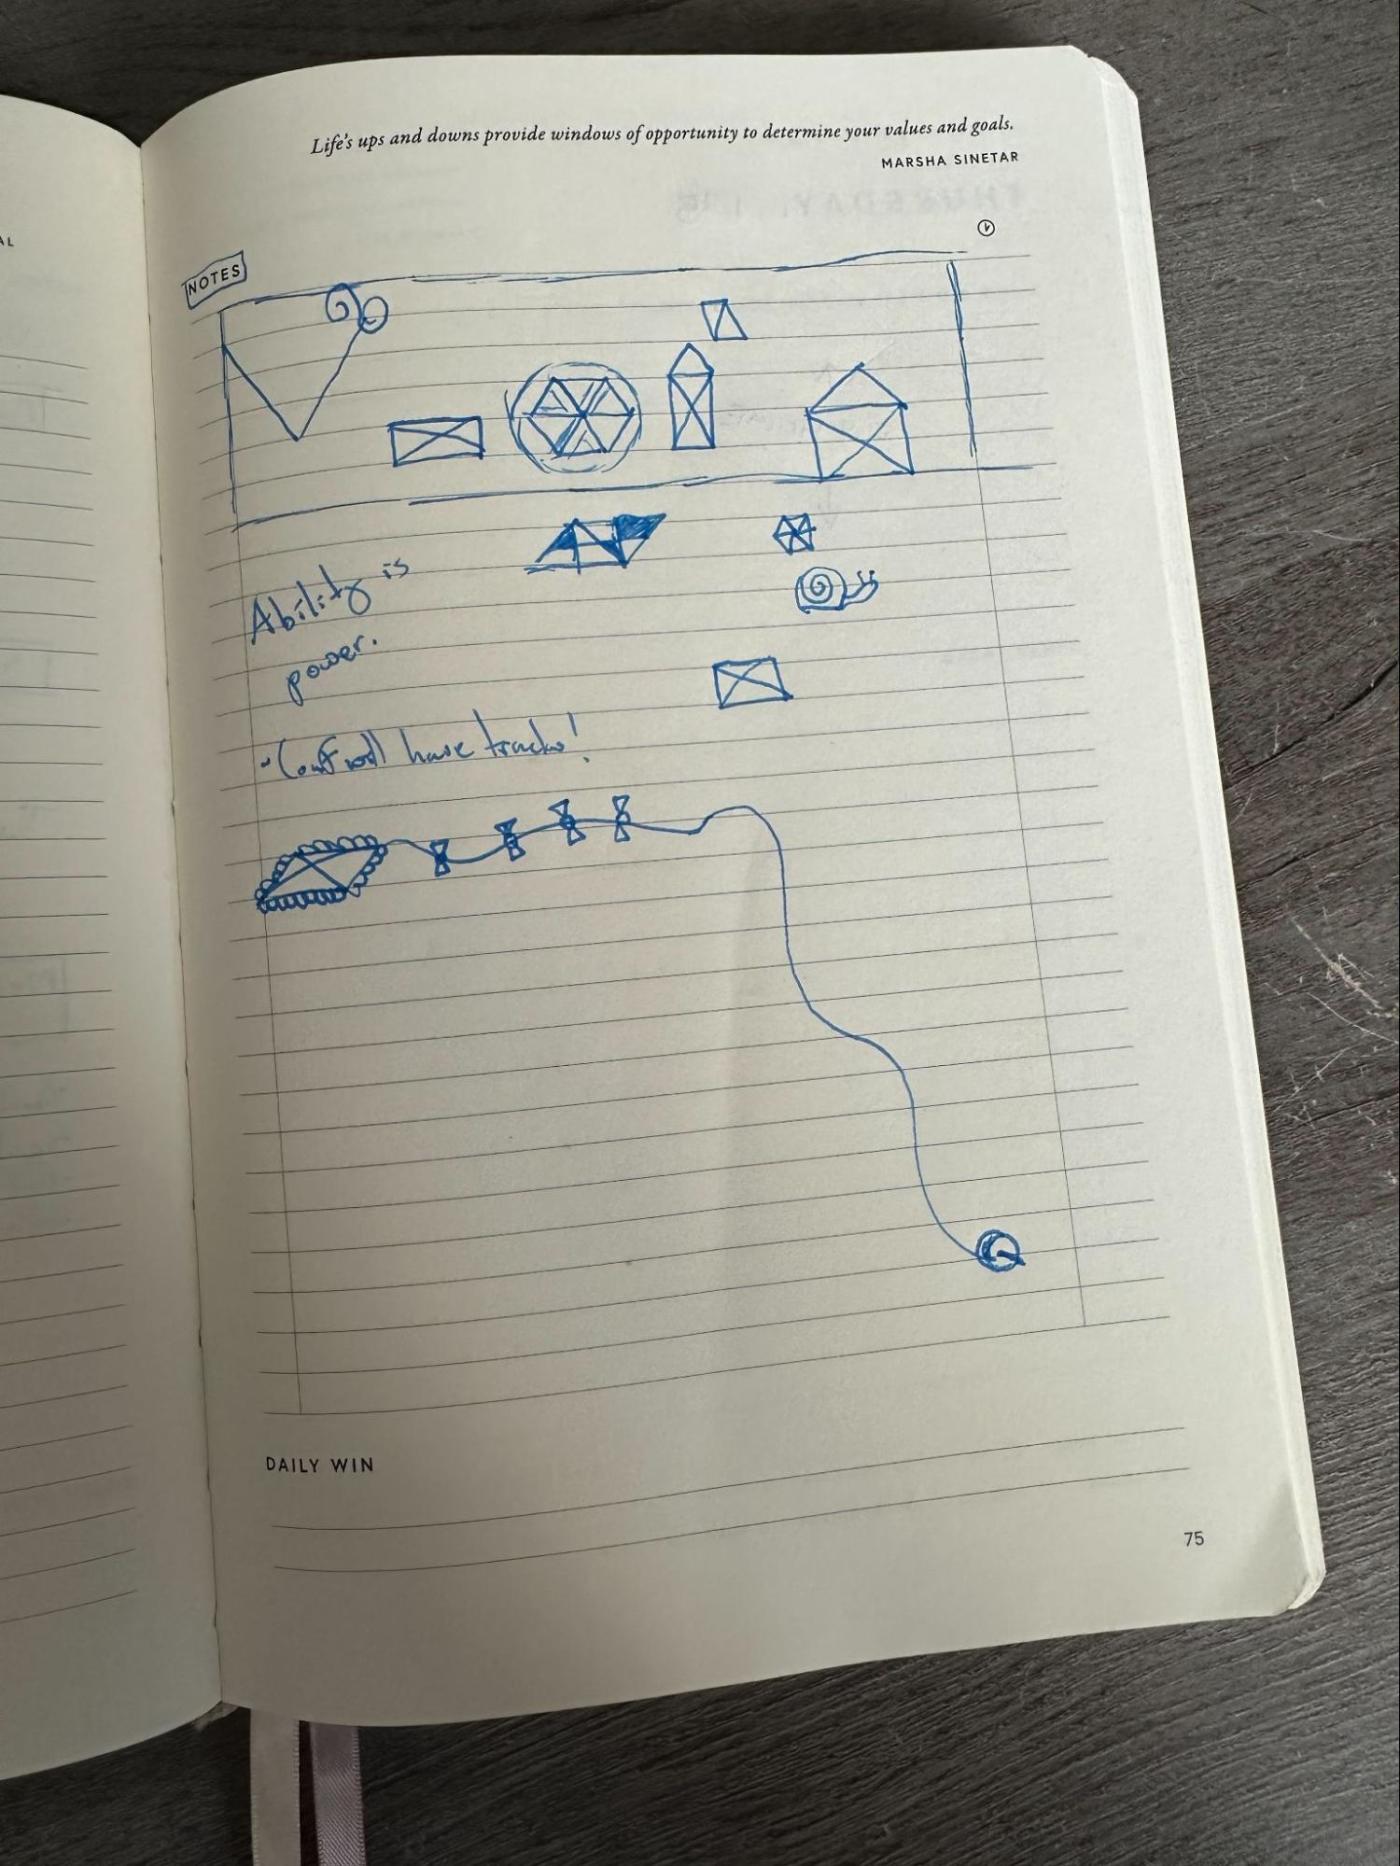 Hannah's doodles in her bullet journal